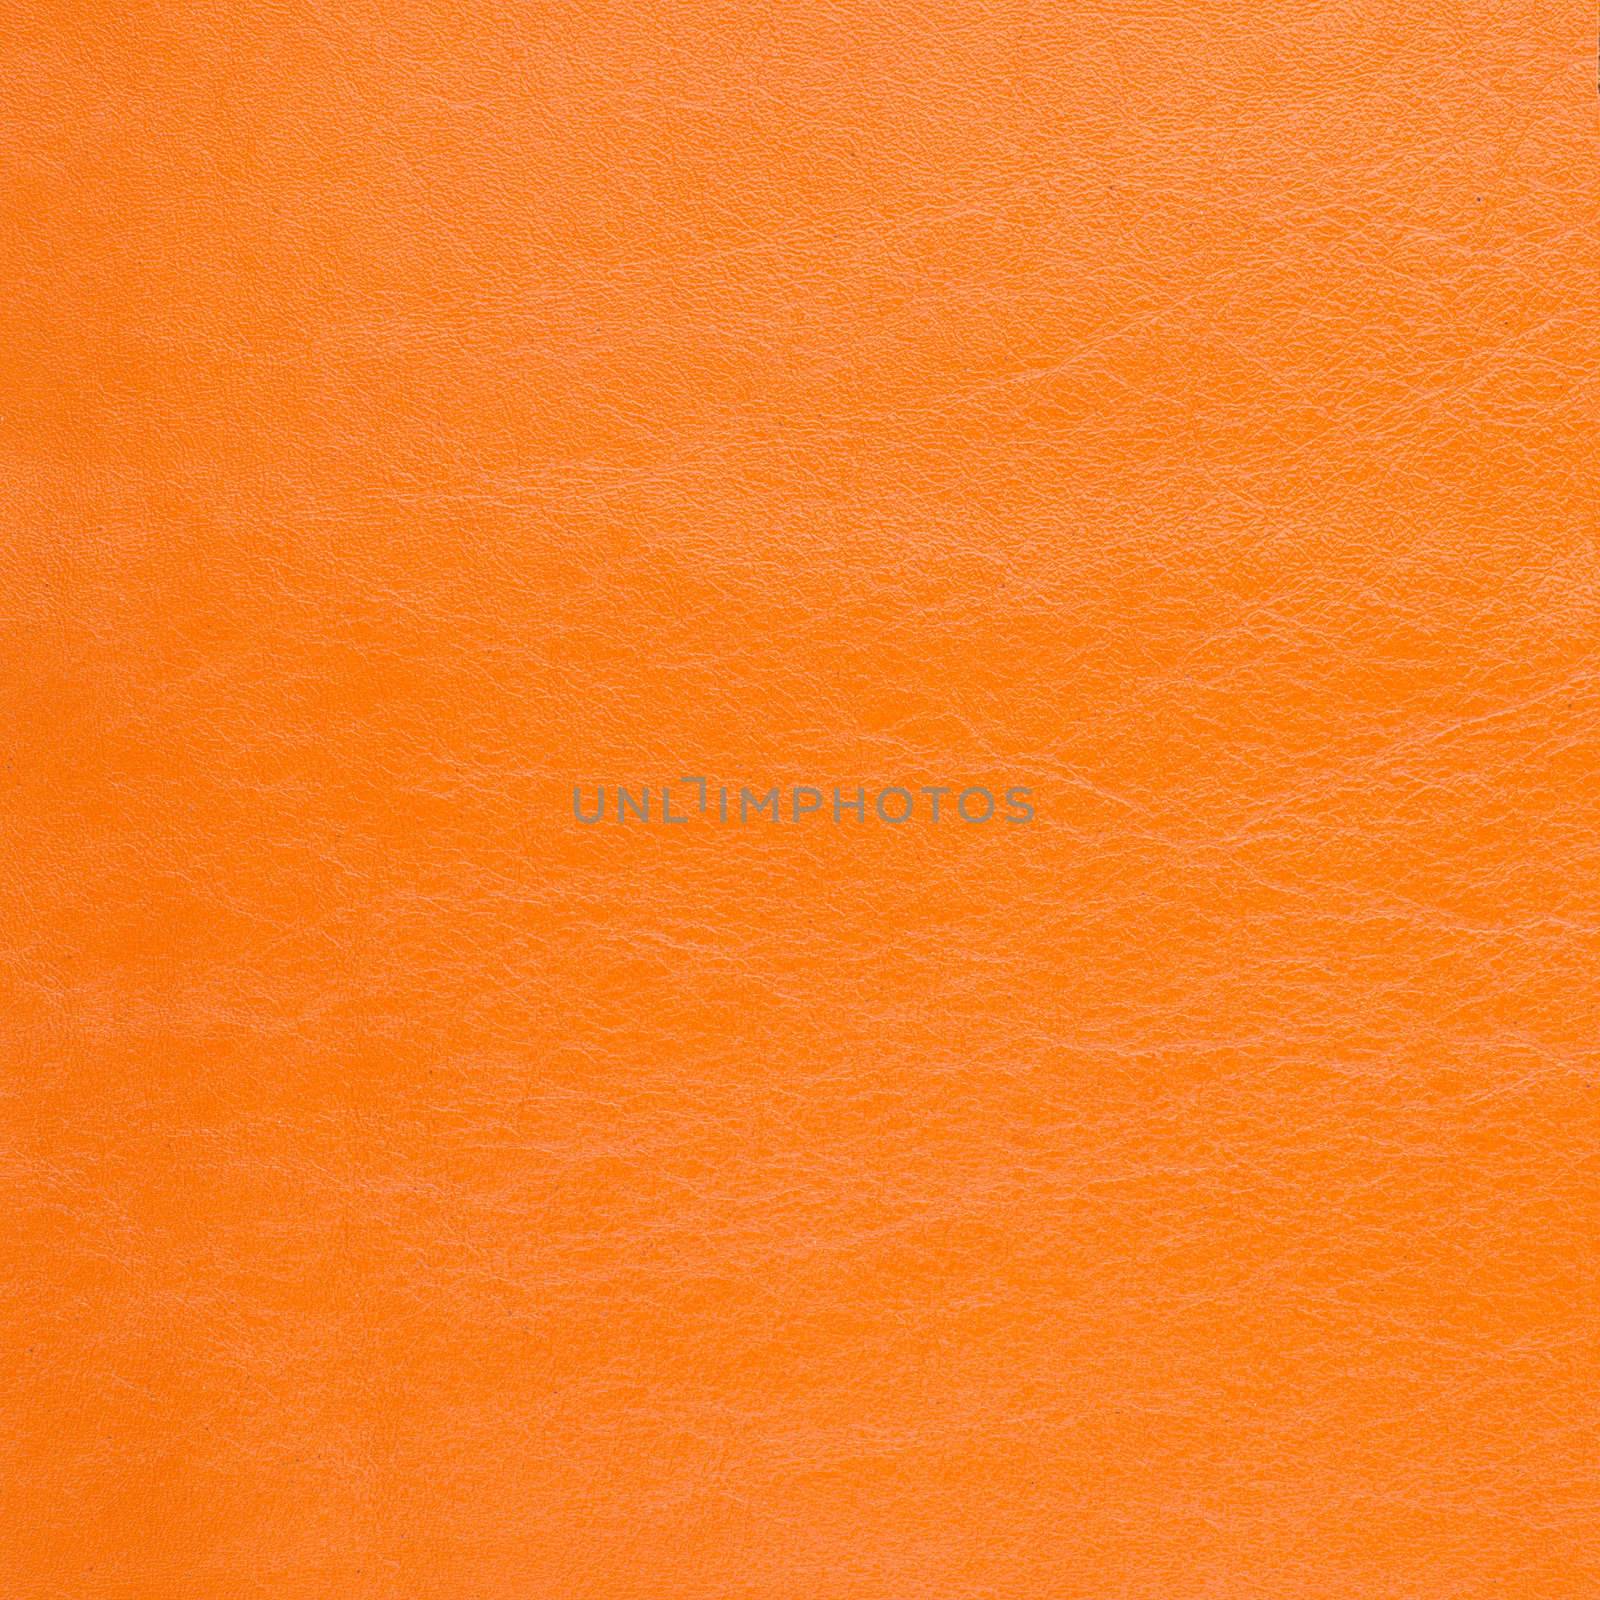 Orange leather background  by homydesign